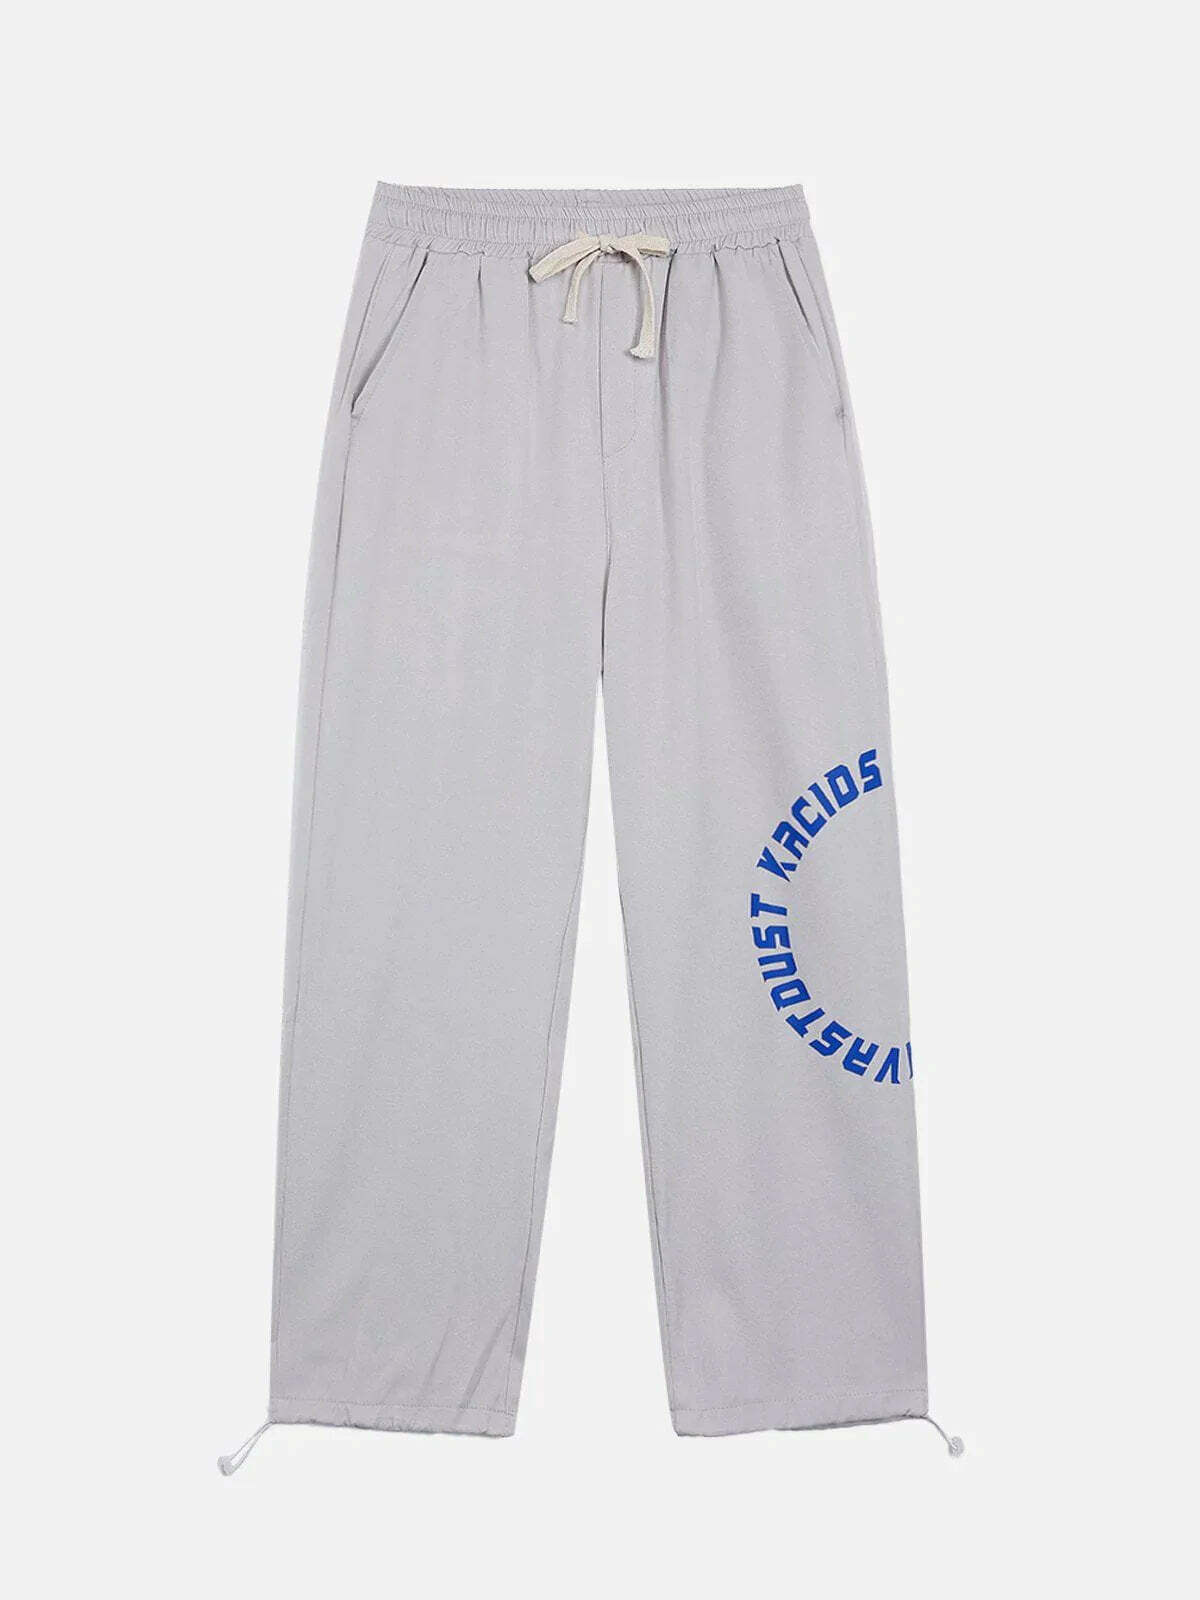 graphics embellished denim pants edgy streetwear essential 6099